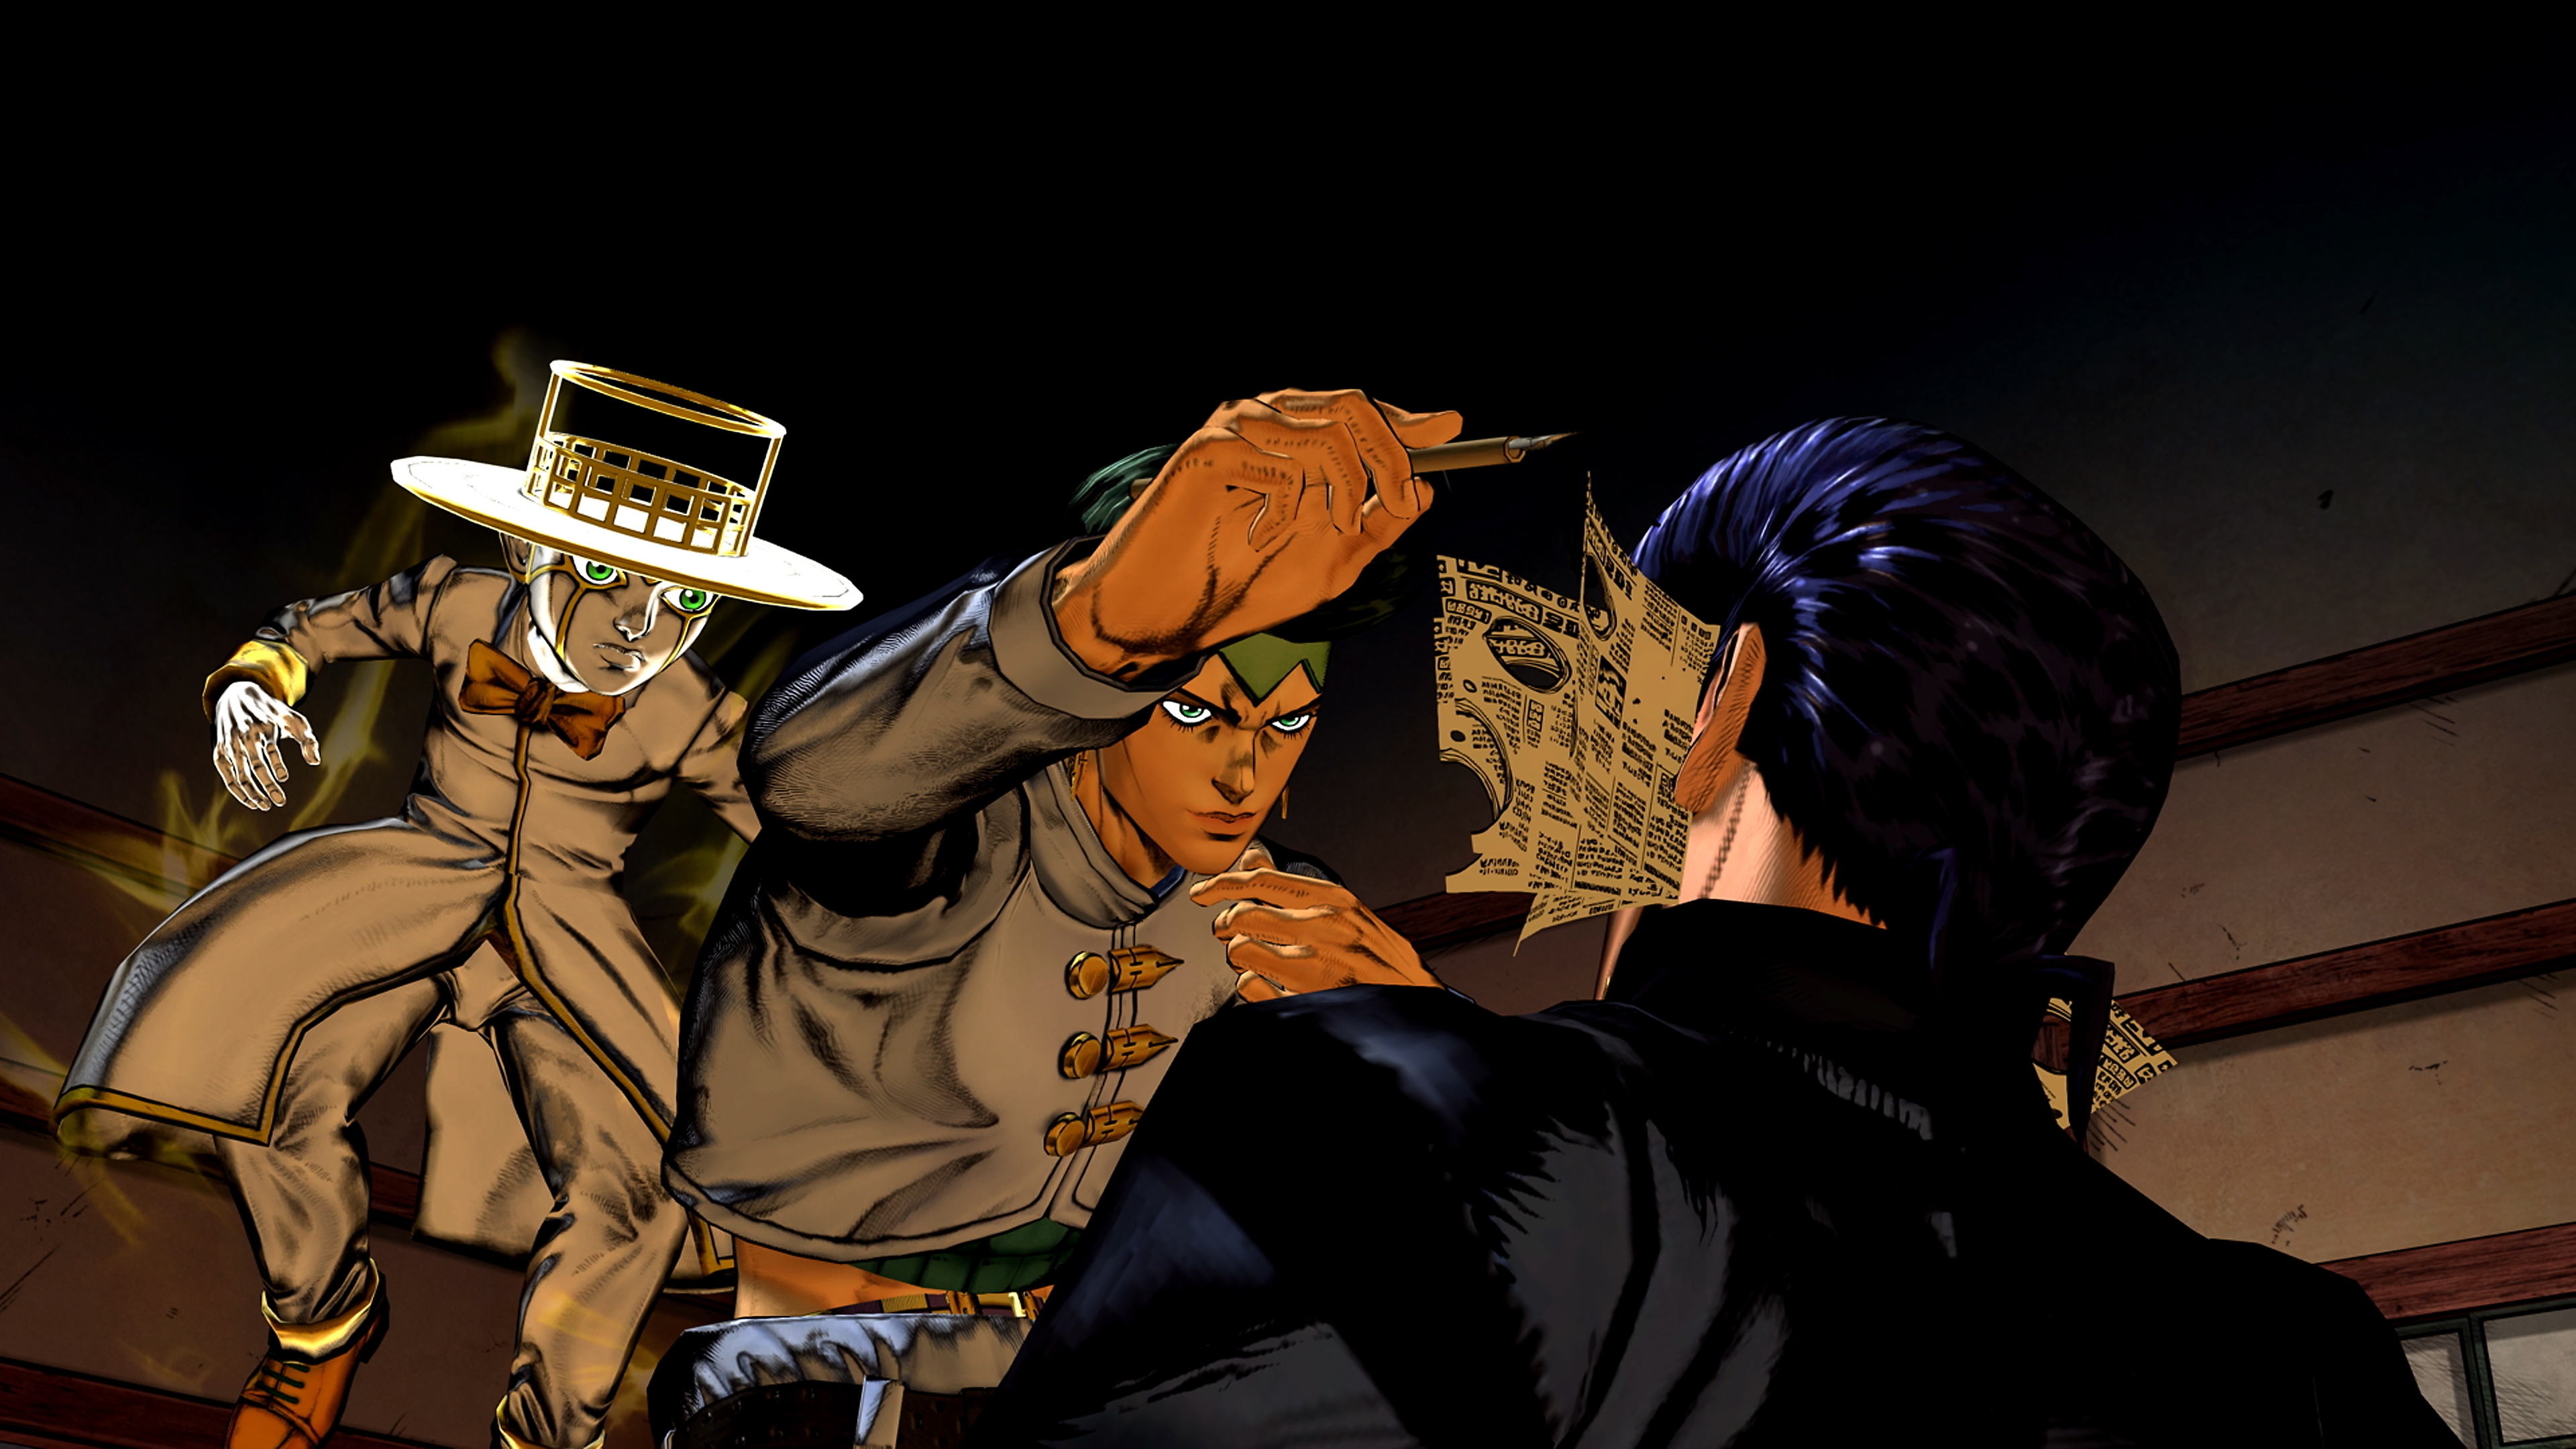 Captura de pantalla de JoJo's Bizarre Adventure All-Star Battle Remastered que muestra a tres personajes en una escena cinematográfica